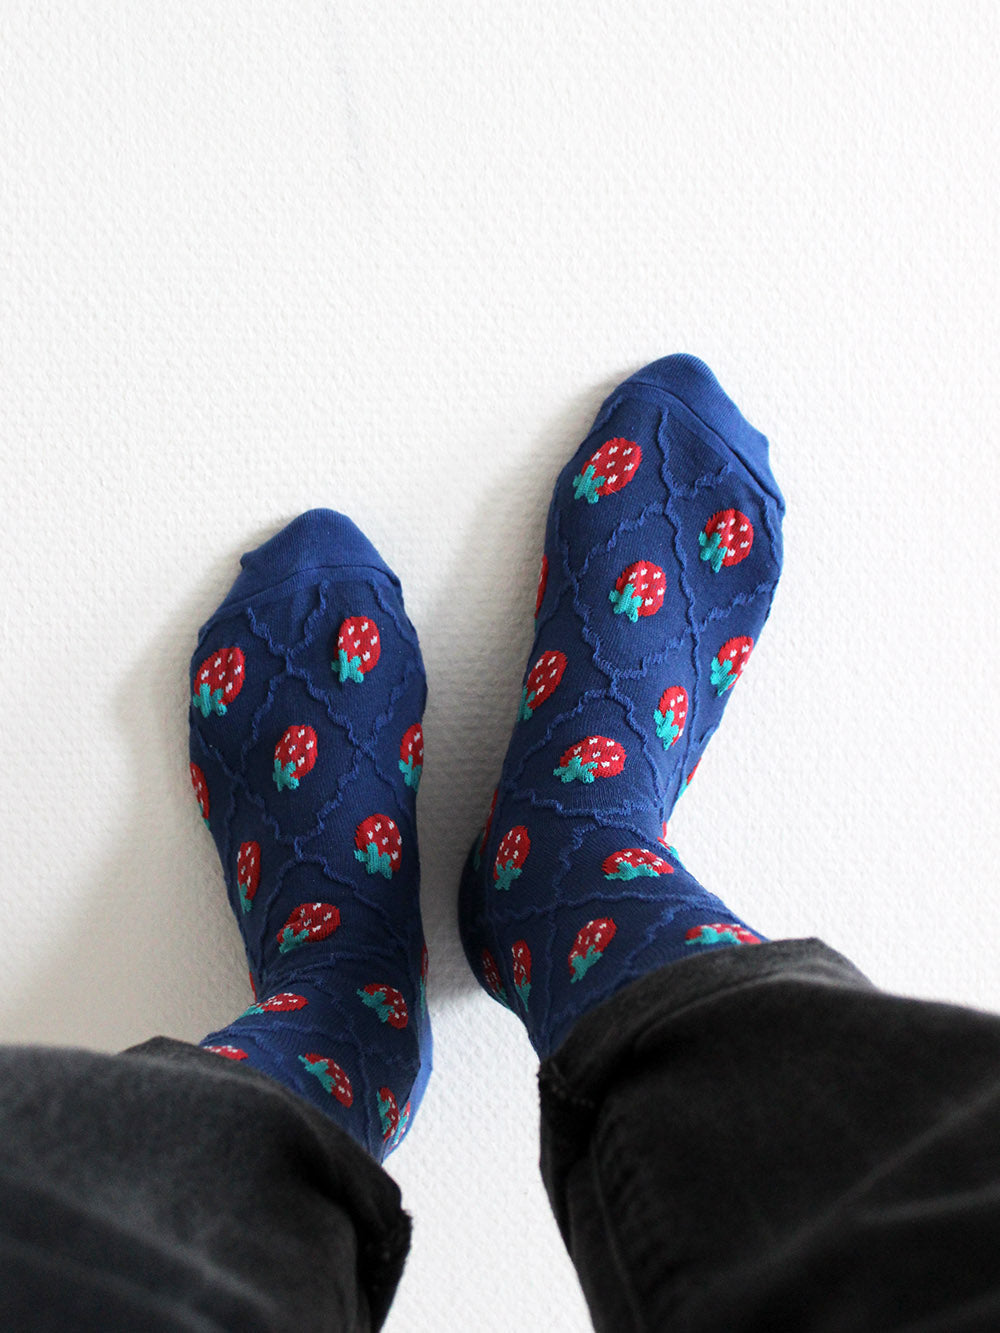 Tragebild blaue Socken mit Erdbeeren mit schwarzen Jeans